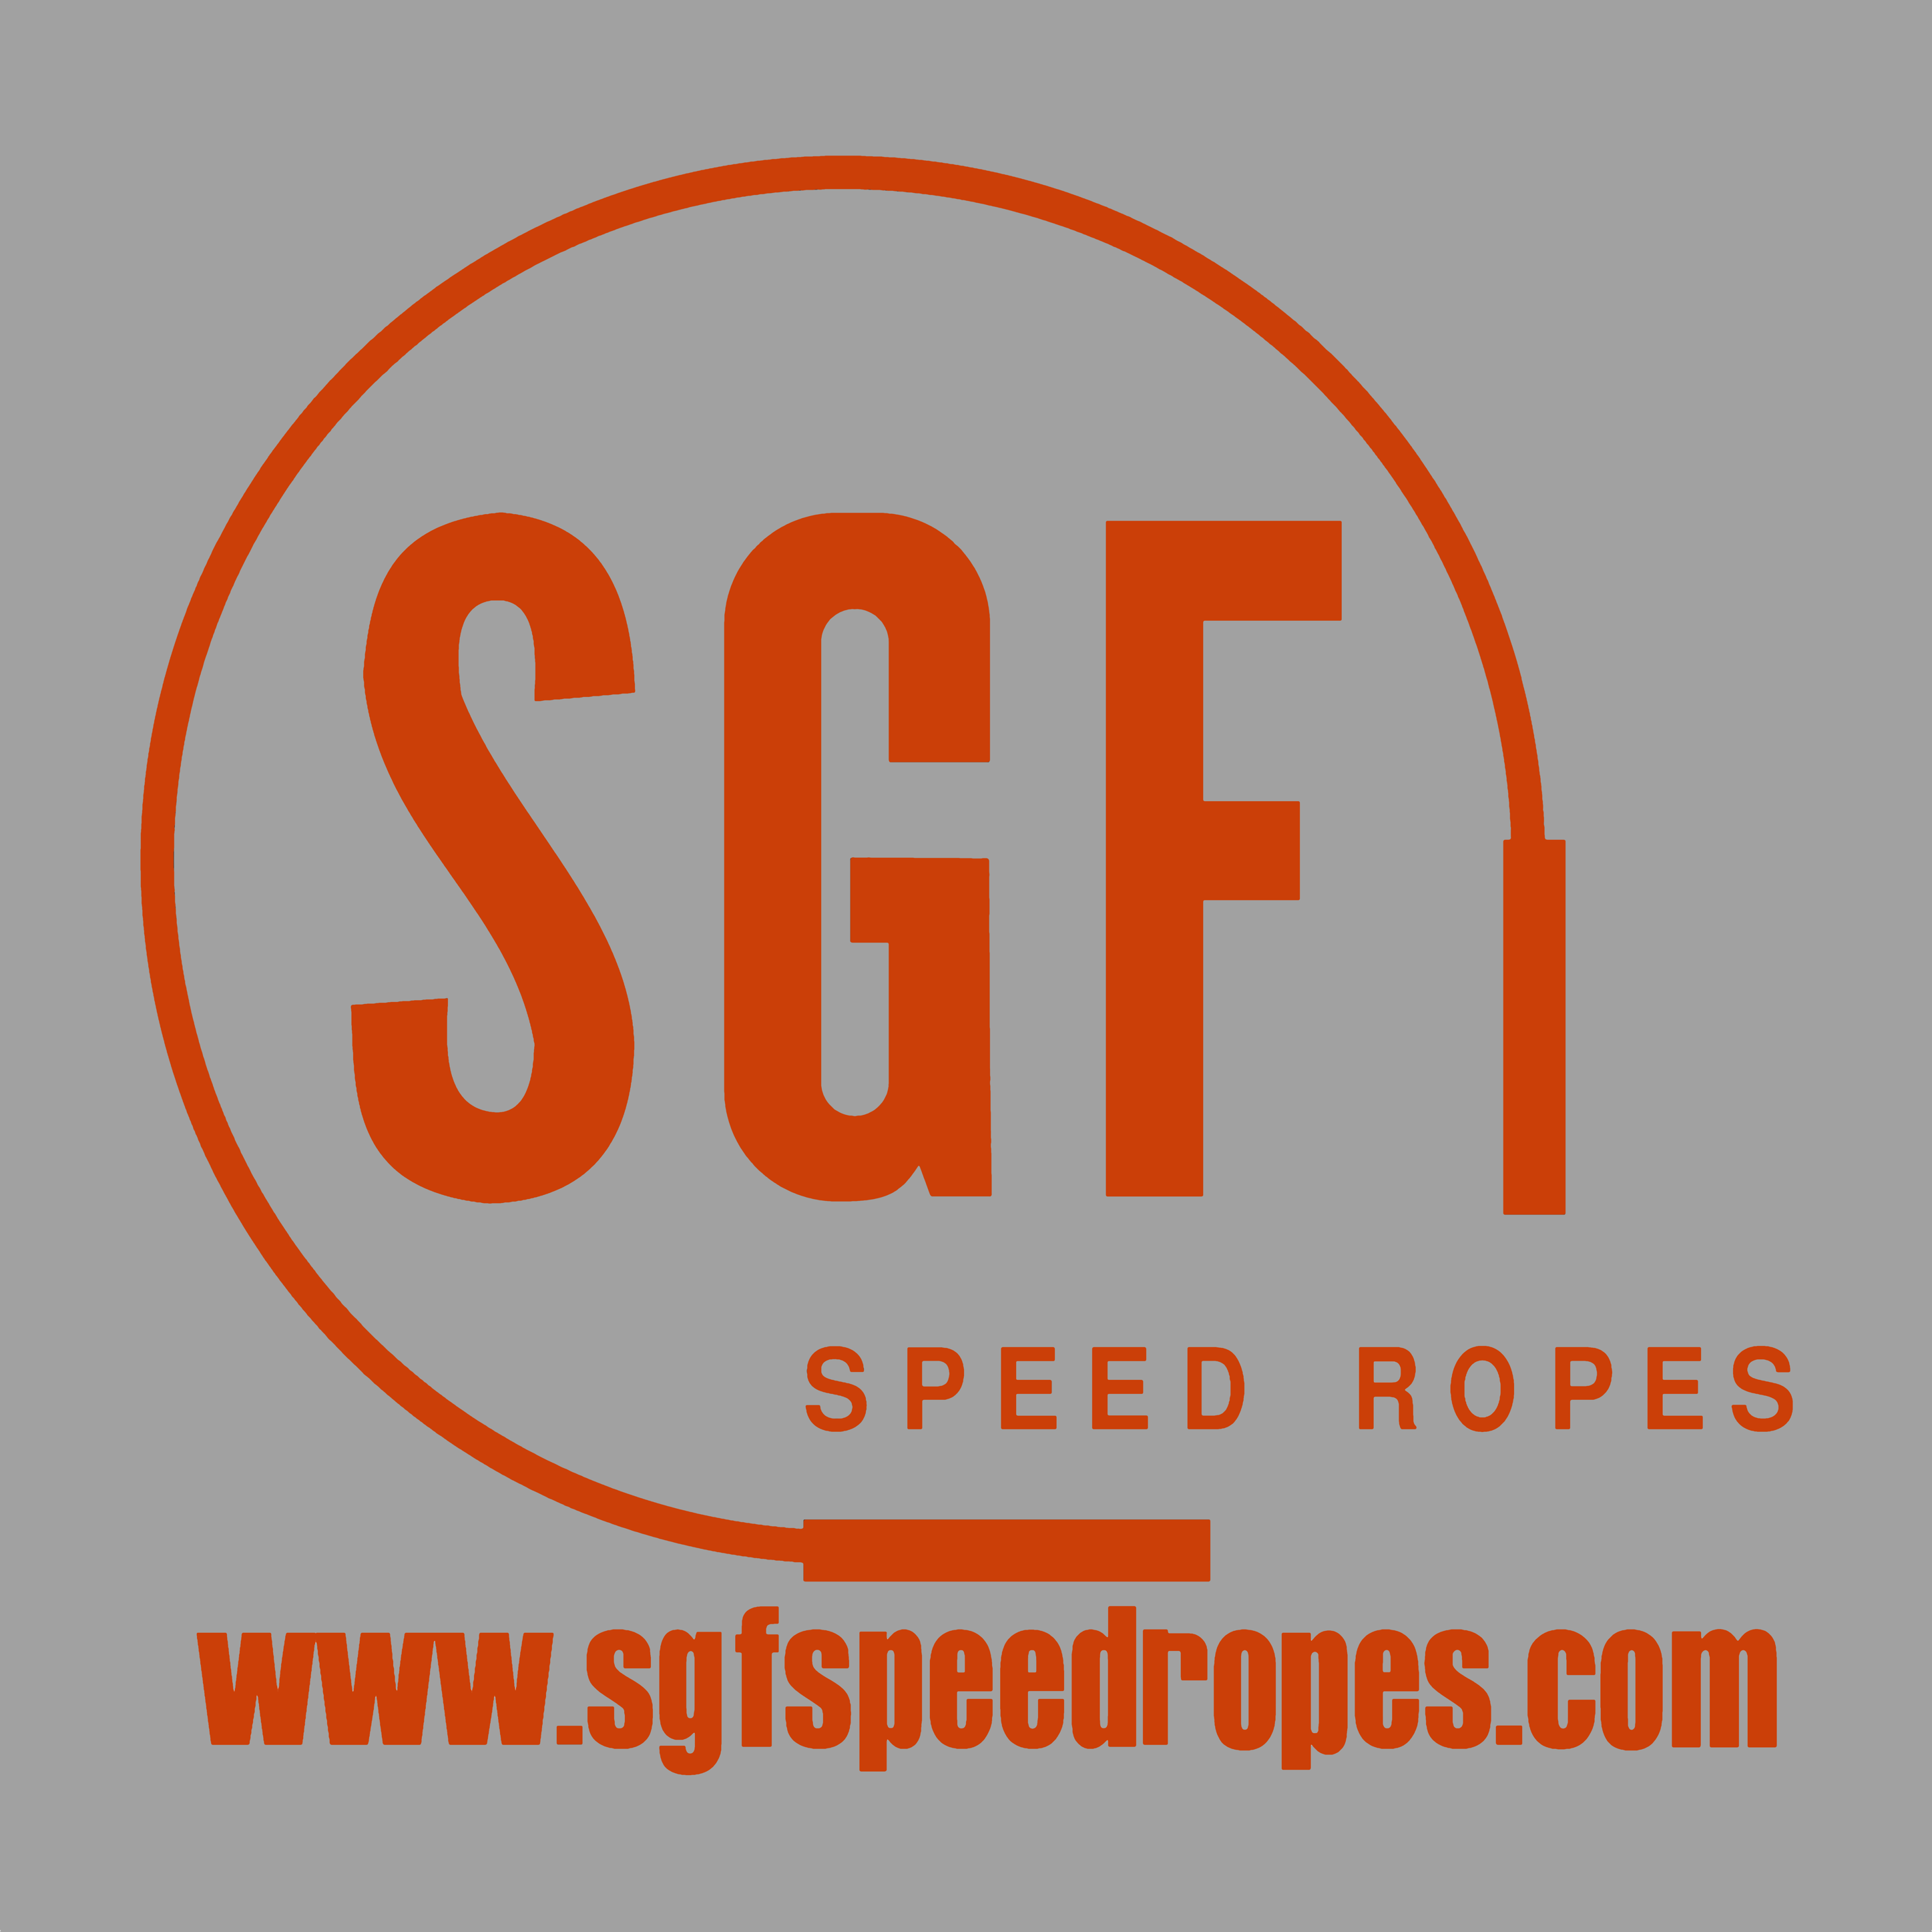 SGFspeedropes